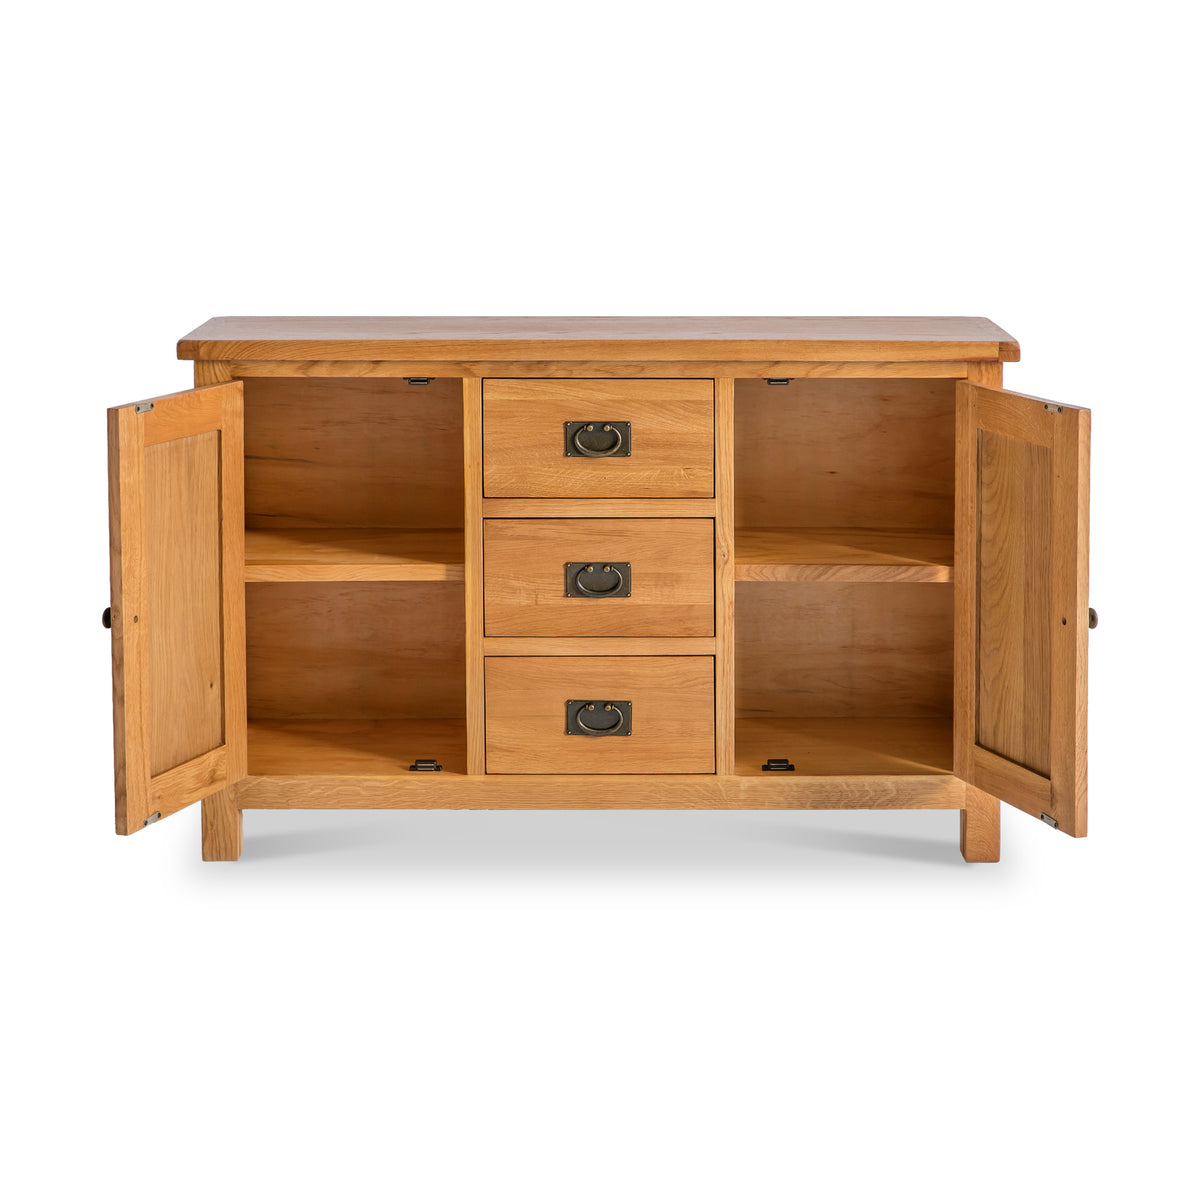 Surrey Oak 3 Drawer Sideboard from Roseland Furniture